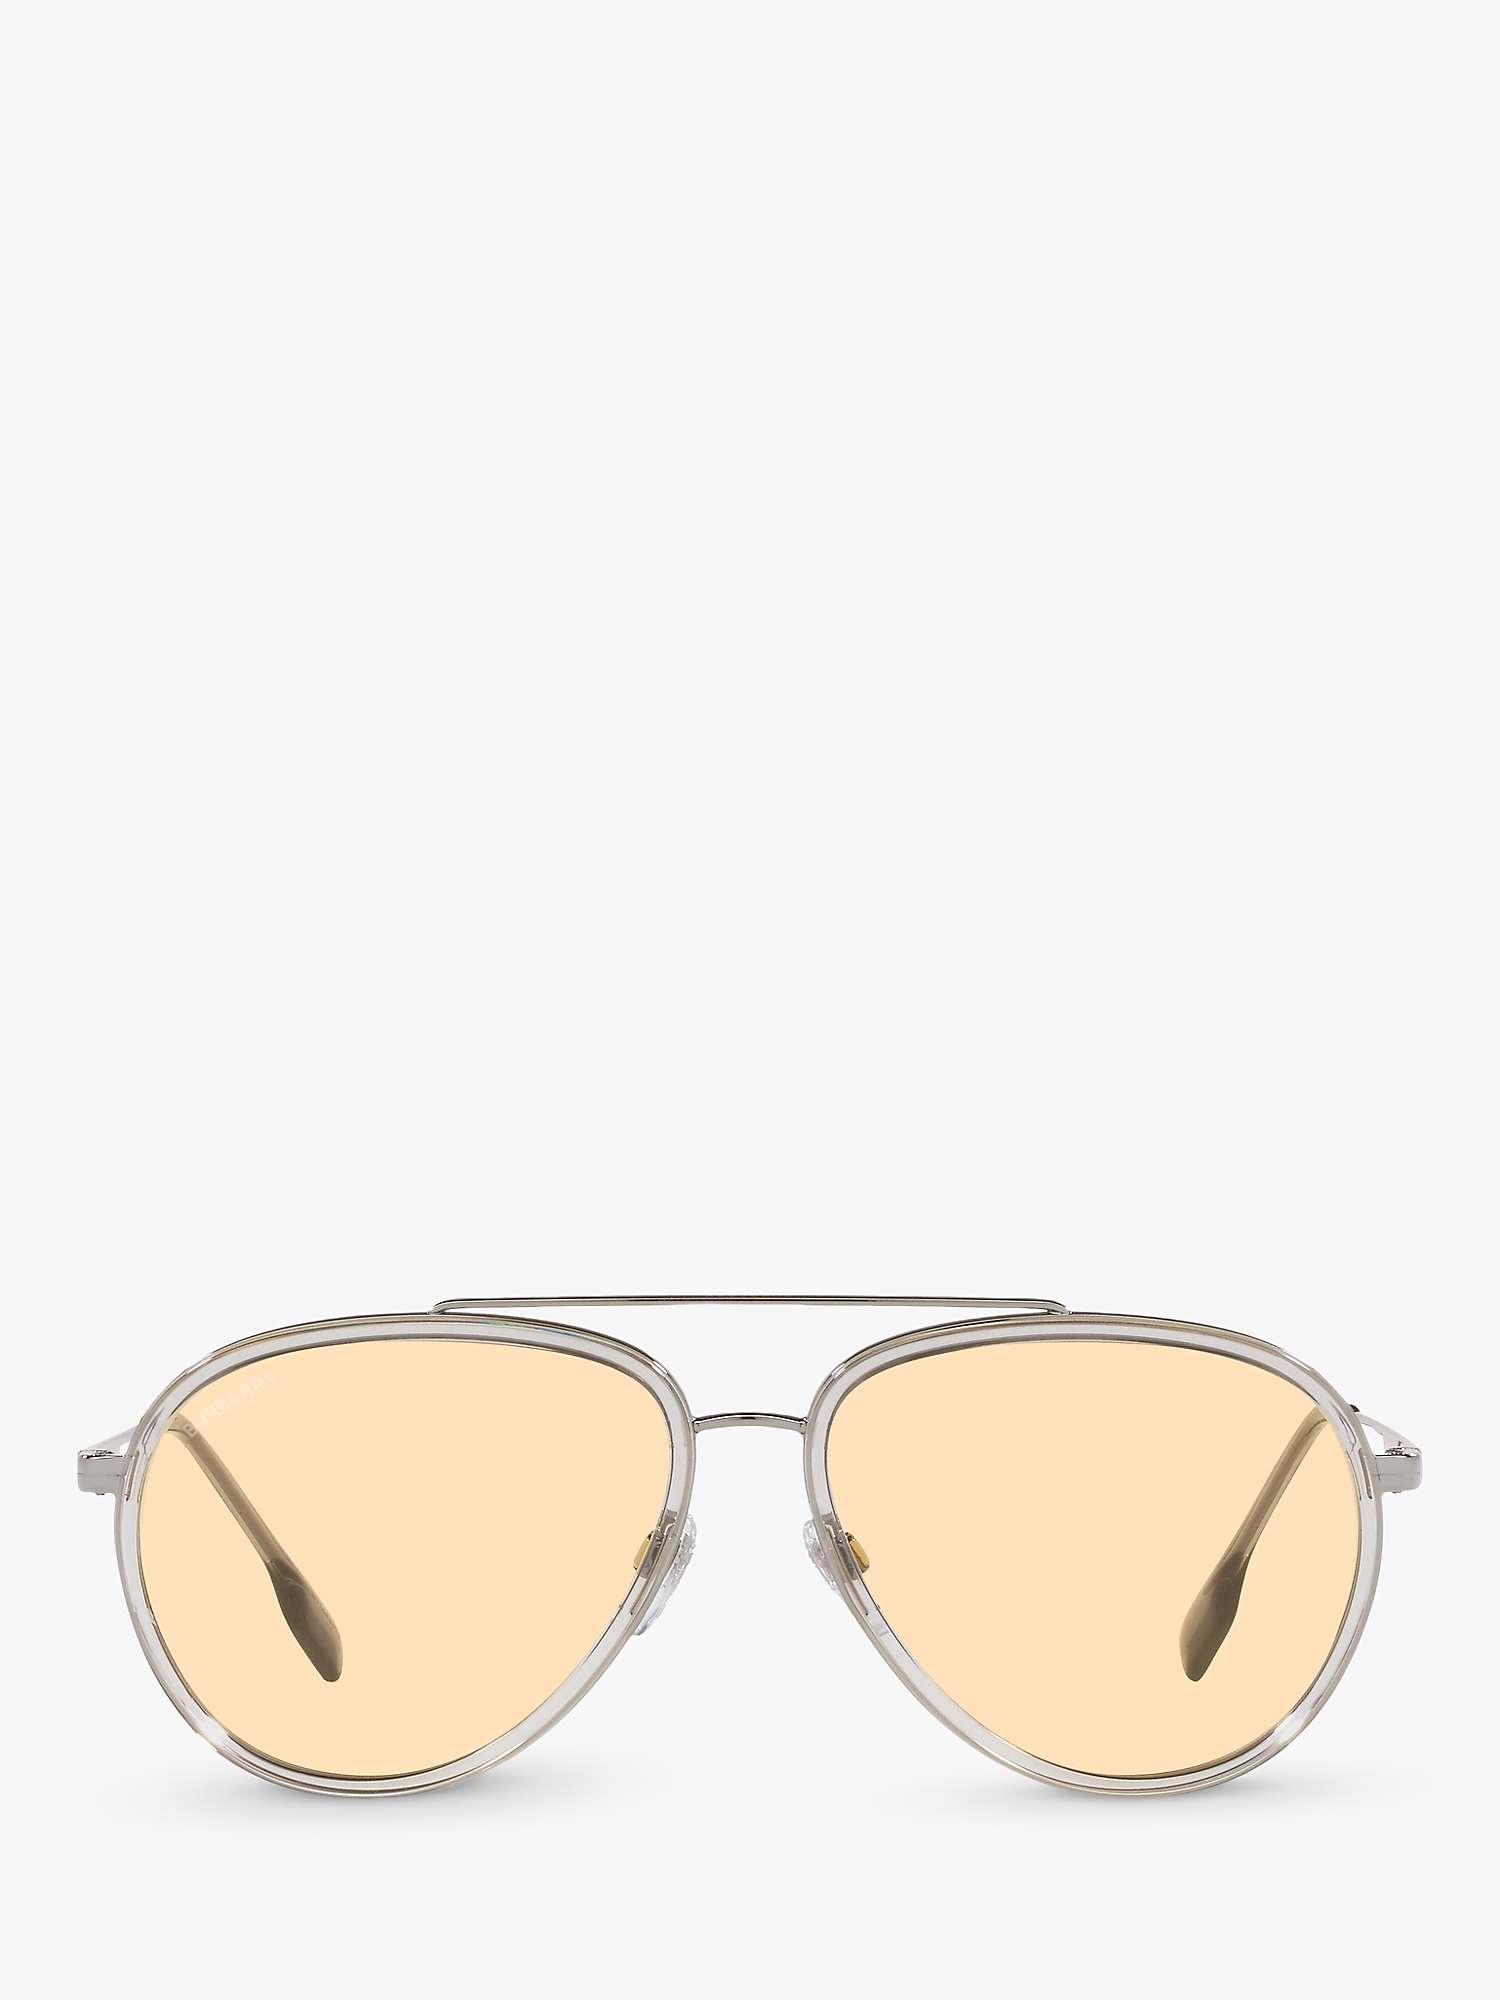 Buy Burberry BE3125 Men's Oliver Aviator Sunglasses, Gunmetal/Yellow Online at johnlewis.com